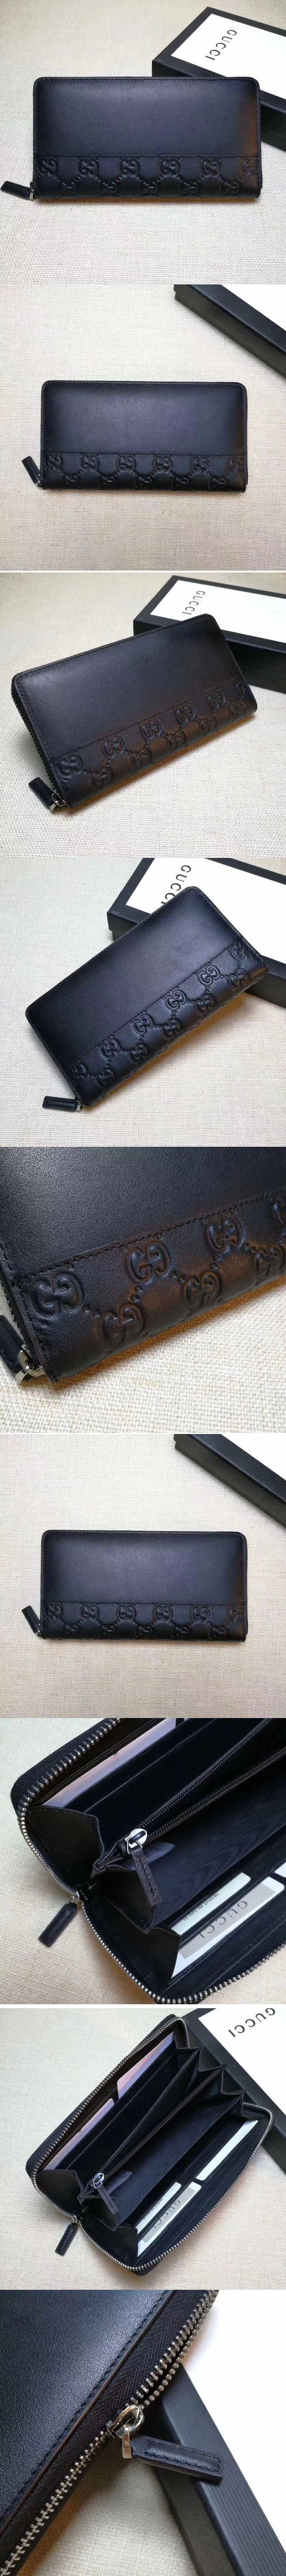 Replica Gucci 408839 Leather Zip Around Wallet Black